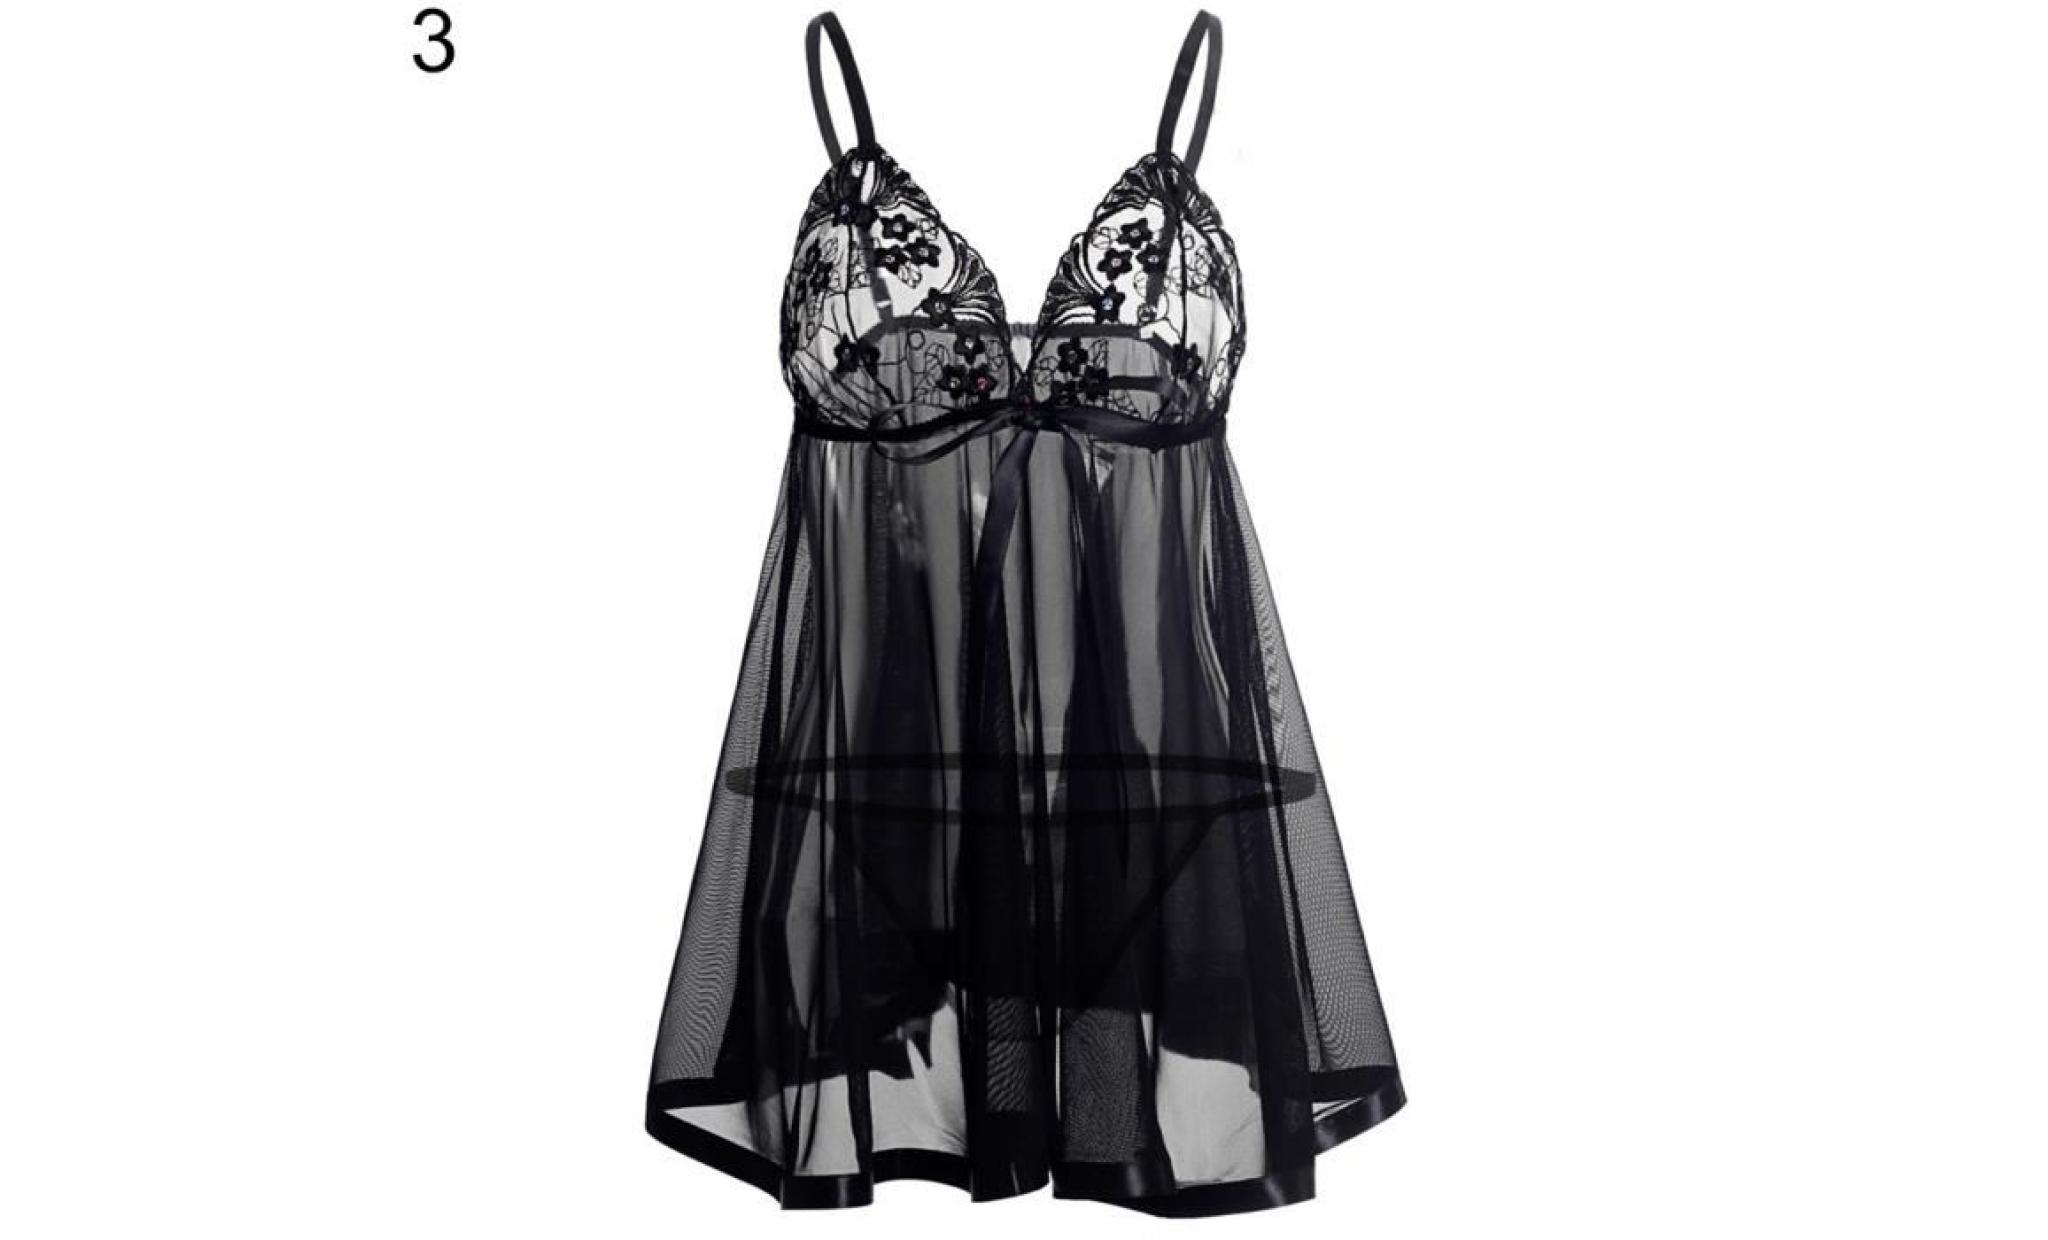 robe en dentelle transparente transparente à lacets pour femmes throng sleepwear nightwear black s